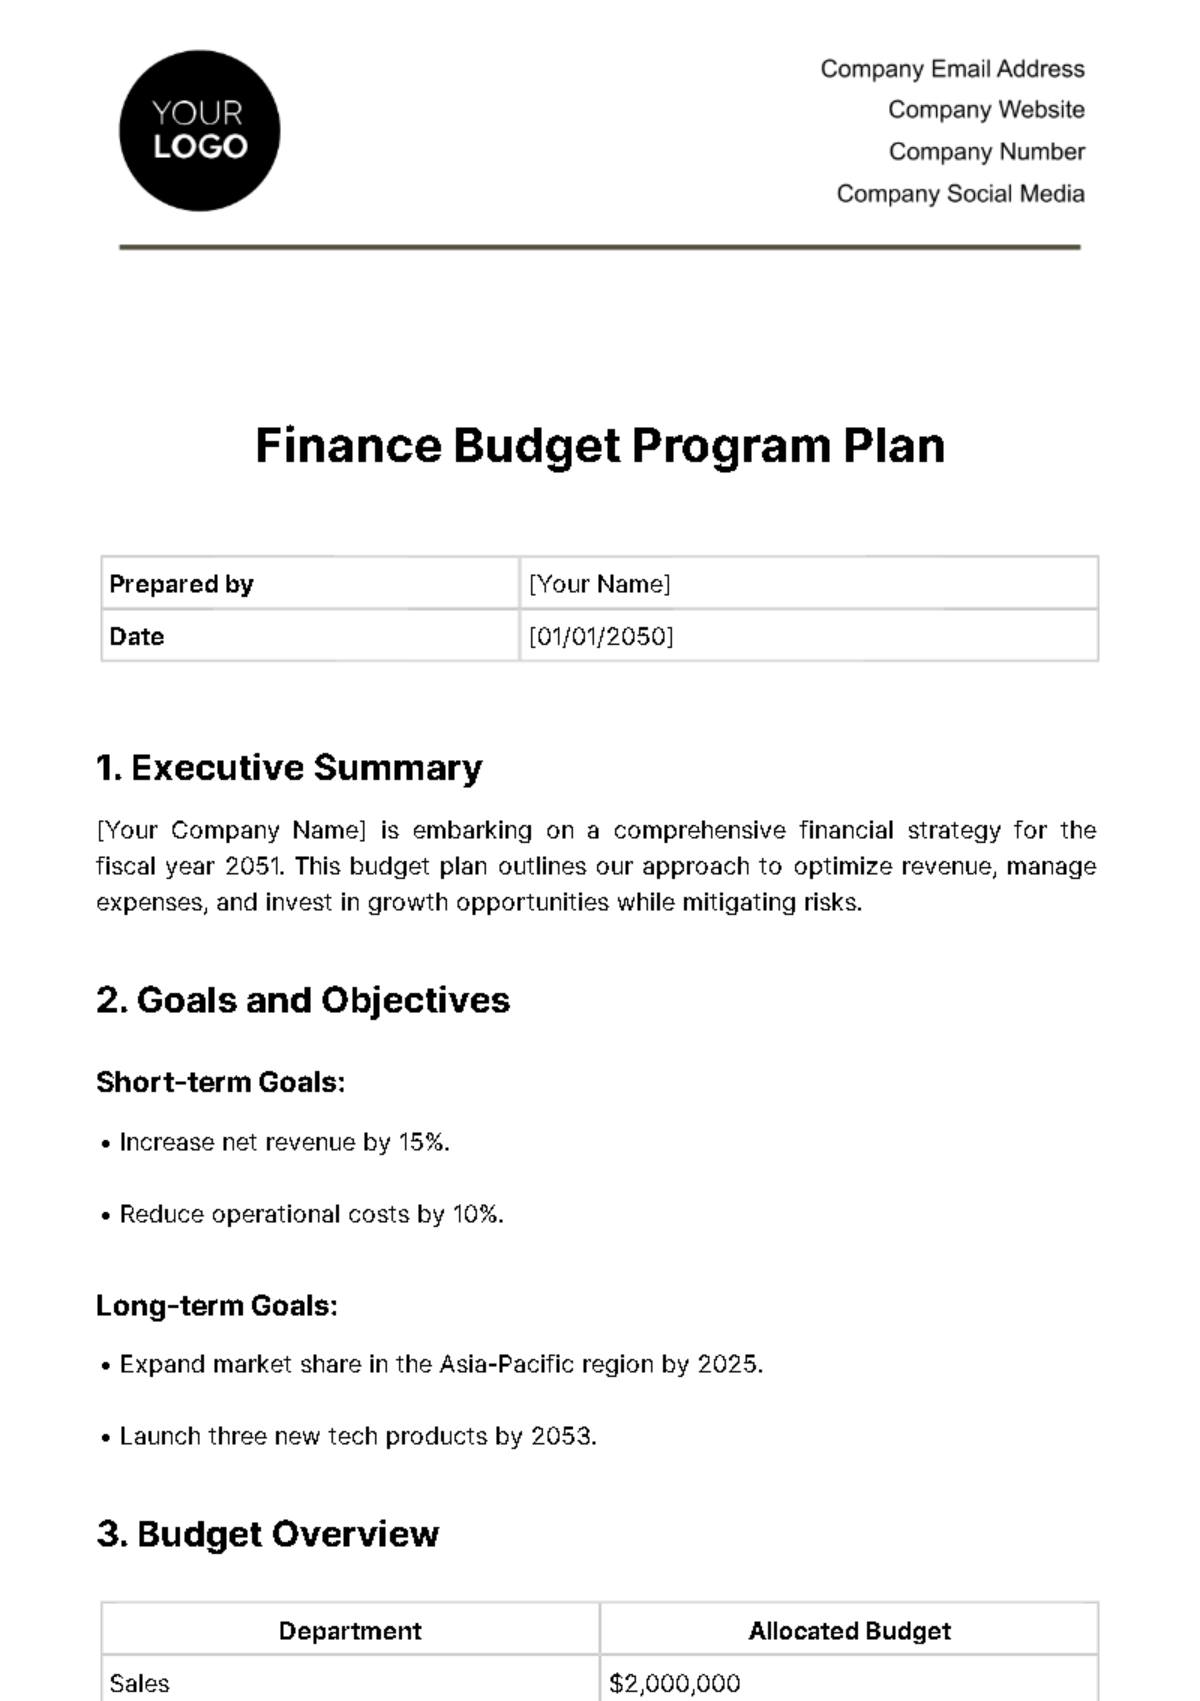 Free Finance Budget Program Plan Template